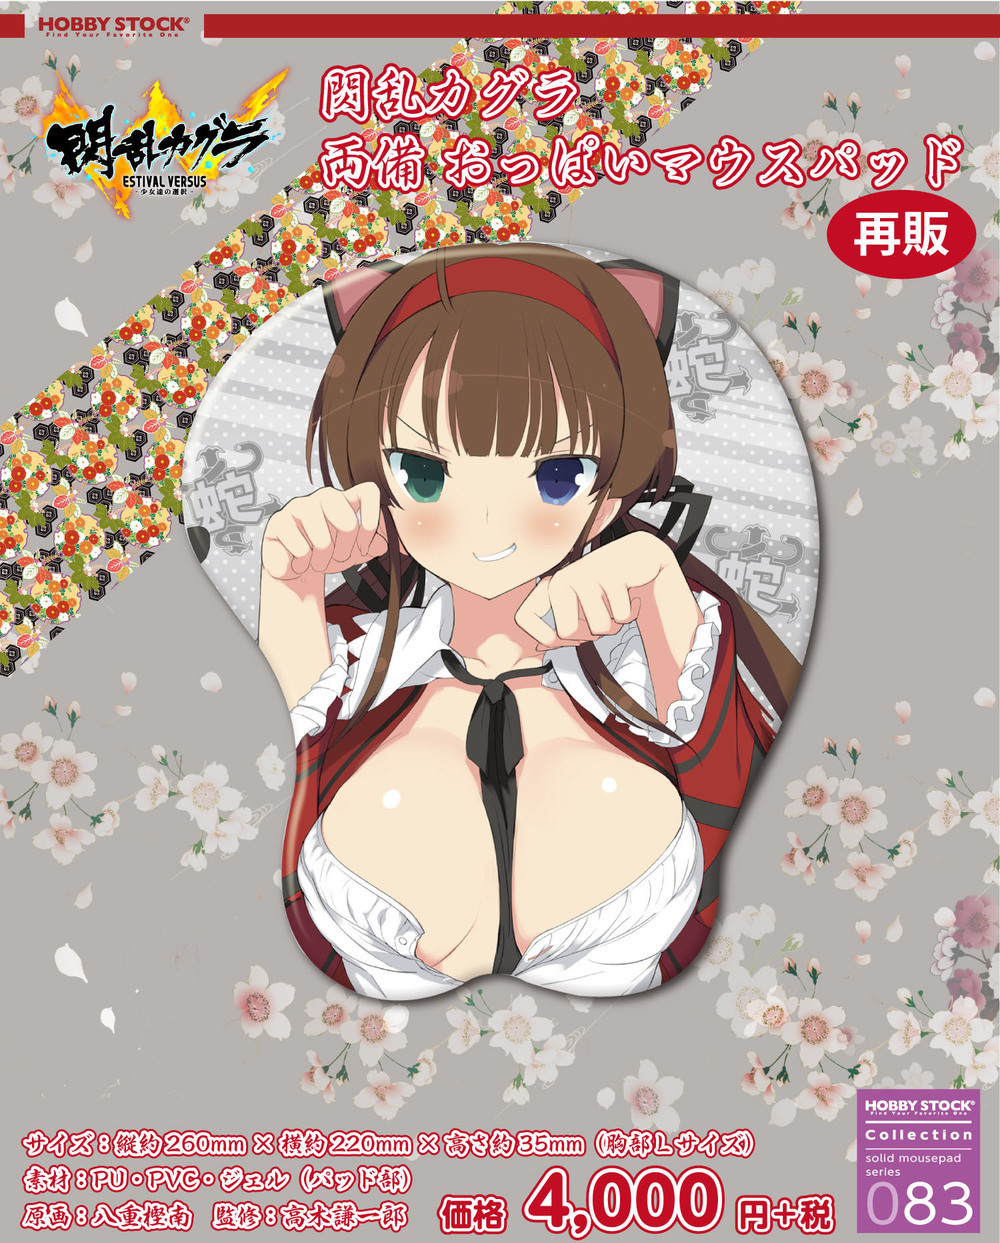 Senran Kagura Ryobi Oppai Mouse Pad 閃乱カグラ 両備 おっぱいマウスパッド Anime Goods Stationery Stationary